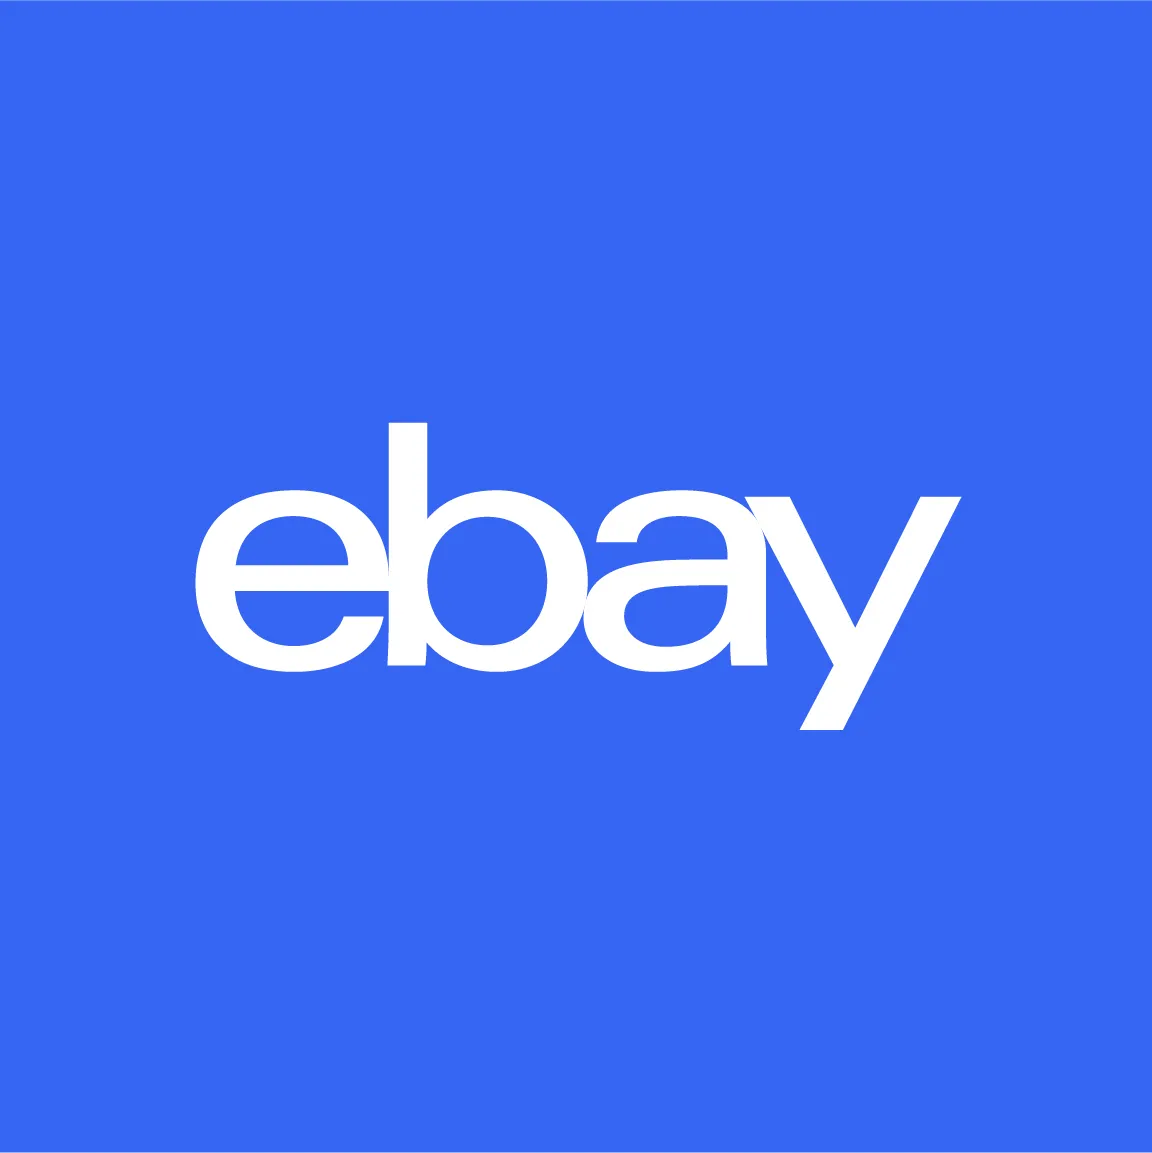 ebay text